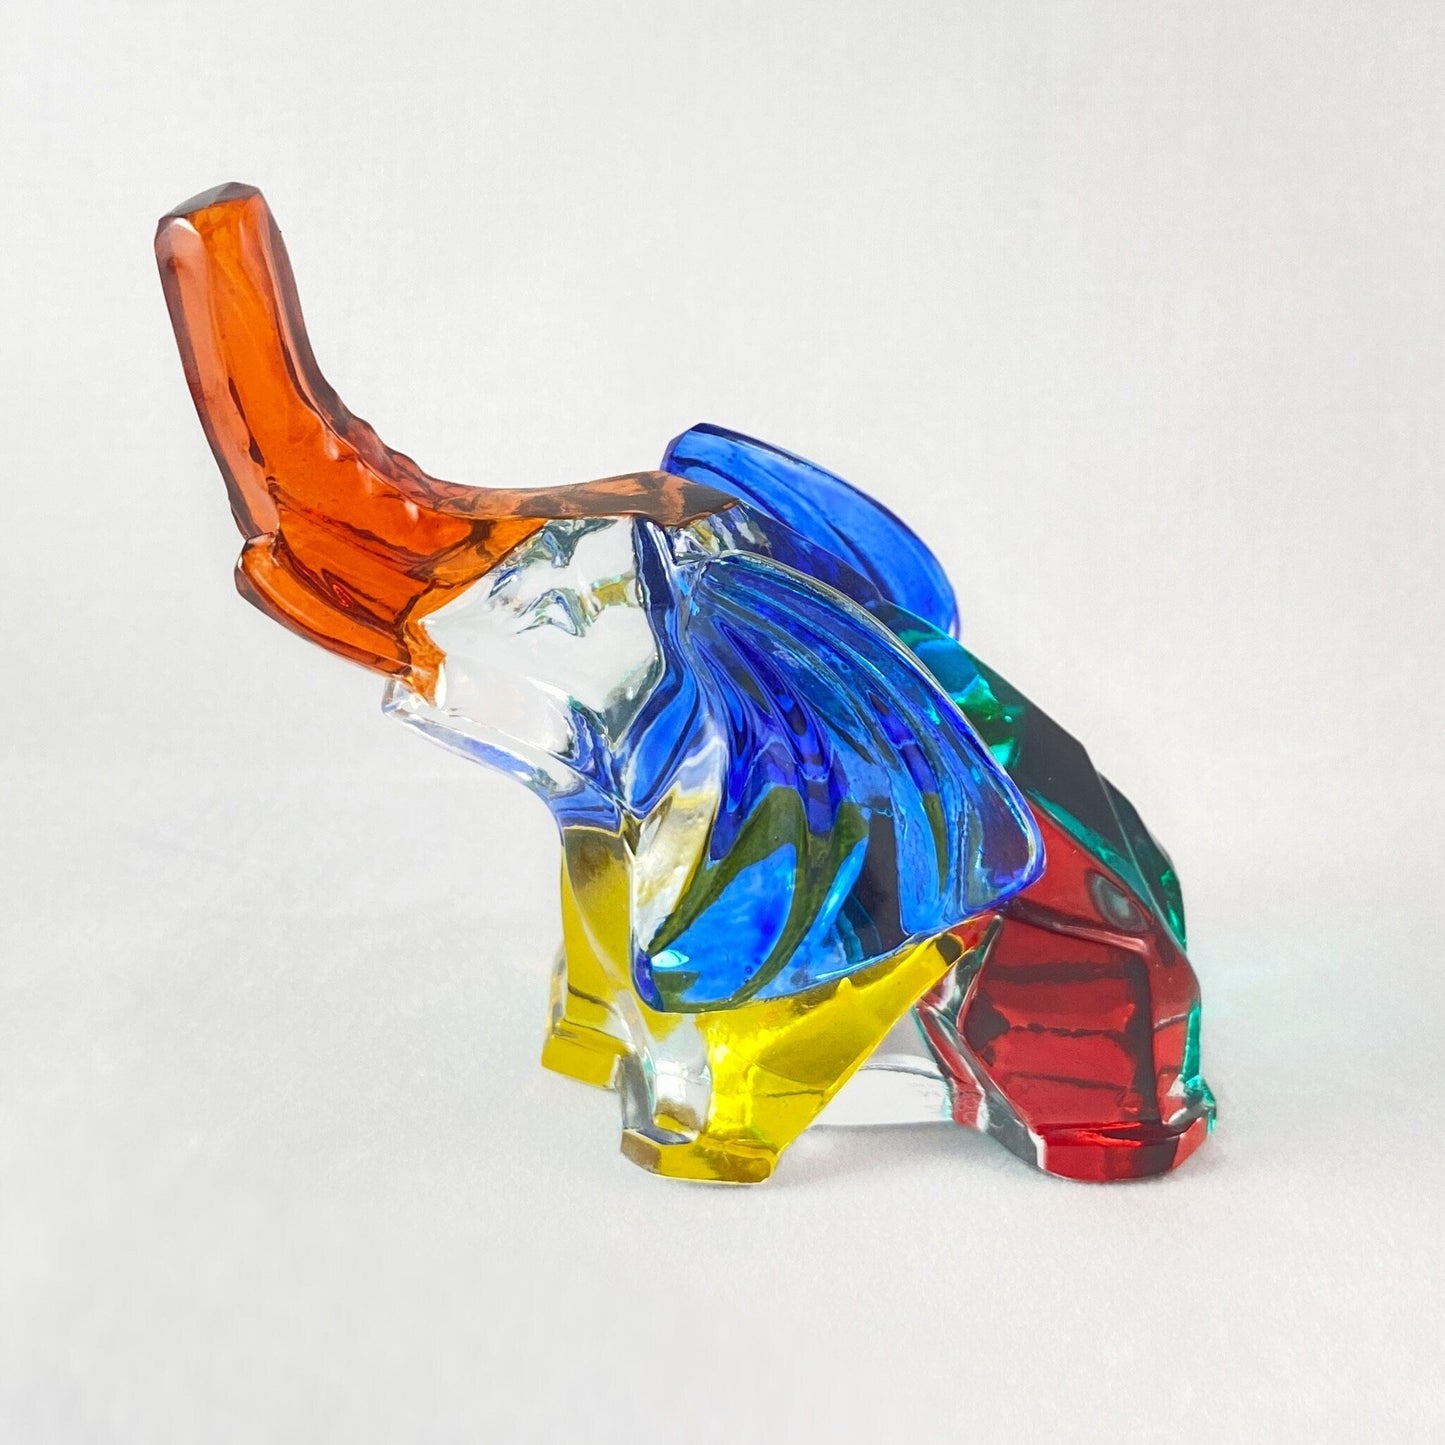 Venetian Glass Elephant Figurine - Handmade in Italy, Colorful Murano Glass